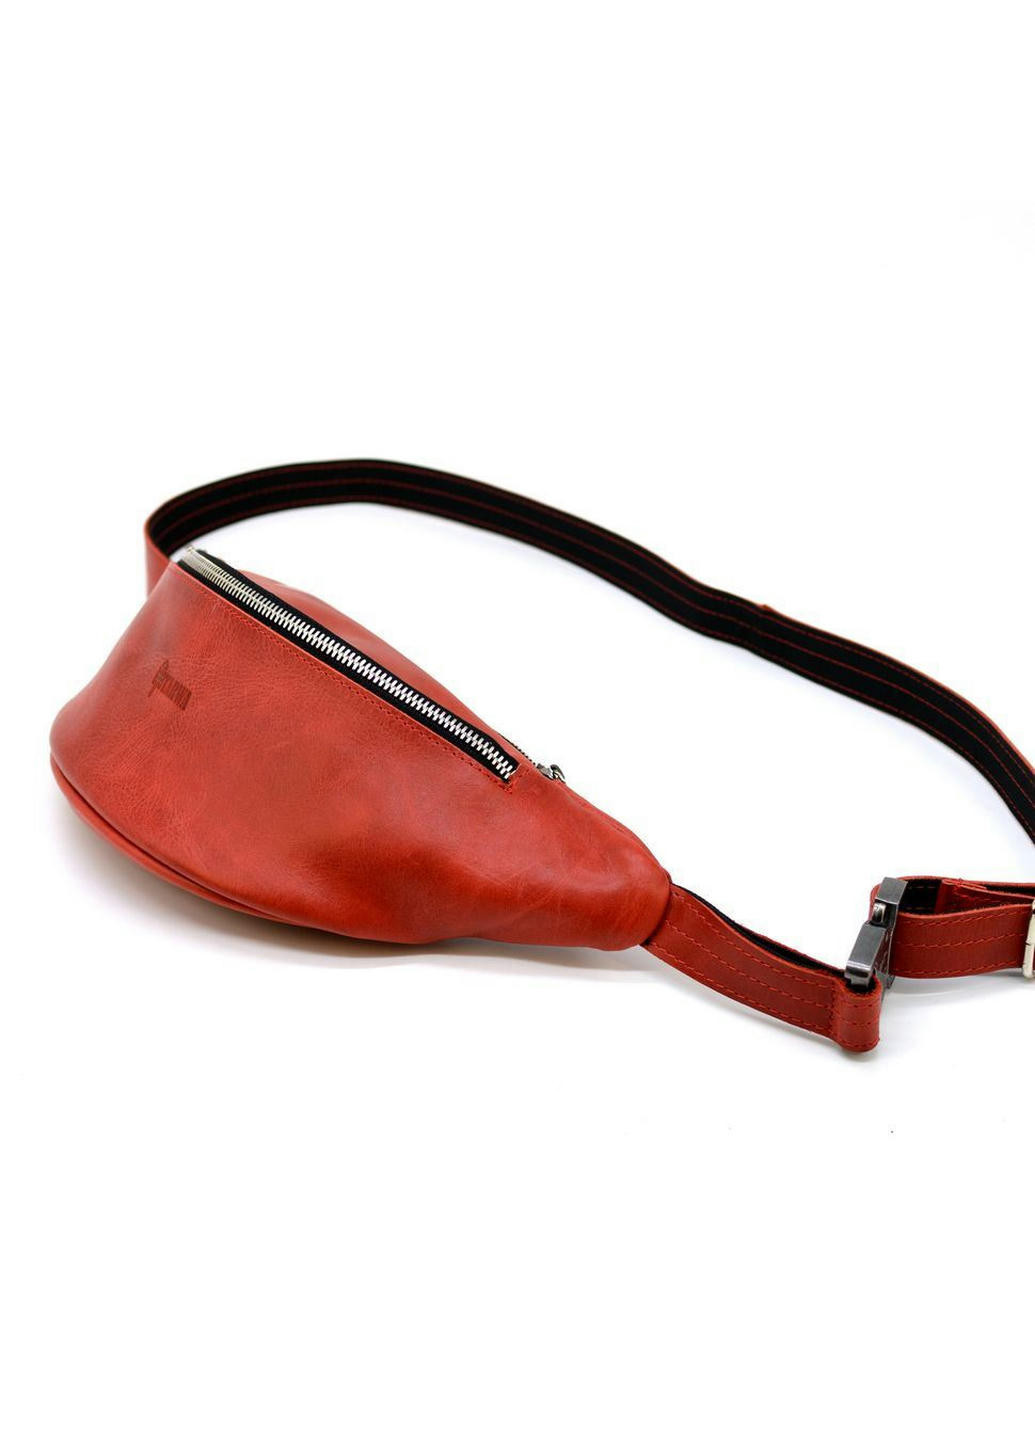 Напоясная женская сумка из натуральной кожи RR-3035-4lx бренд TARWA (257657150)